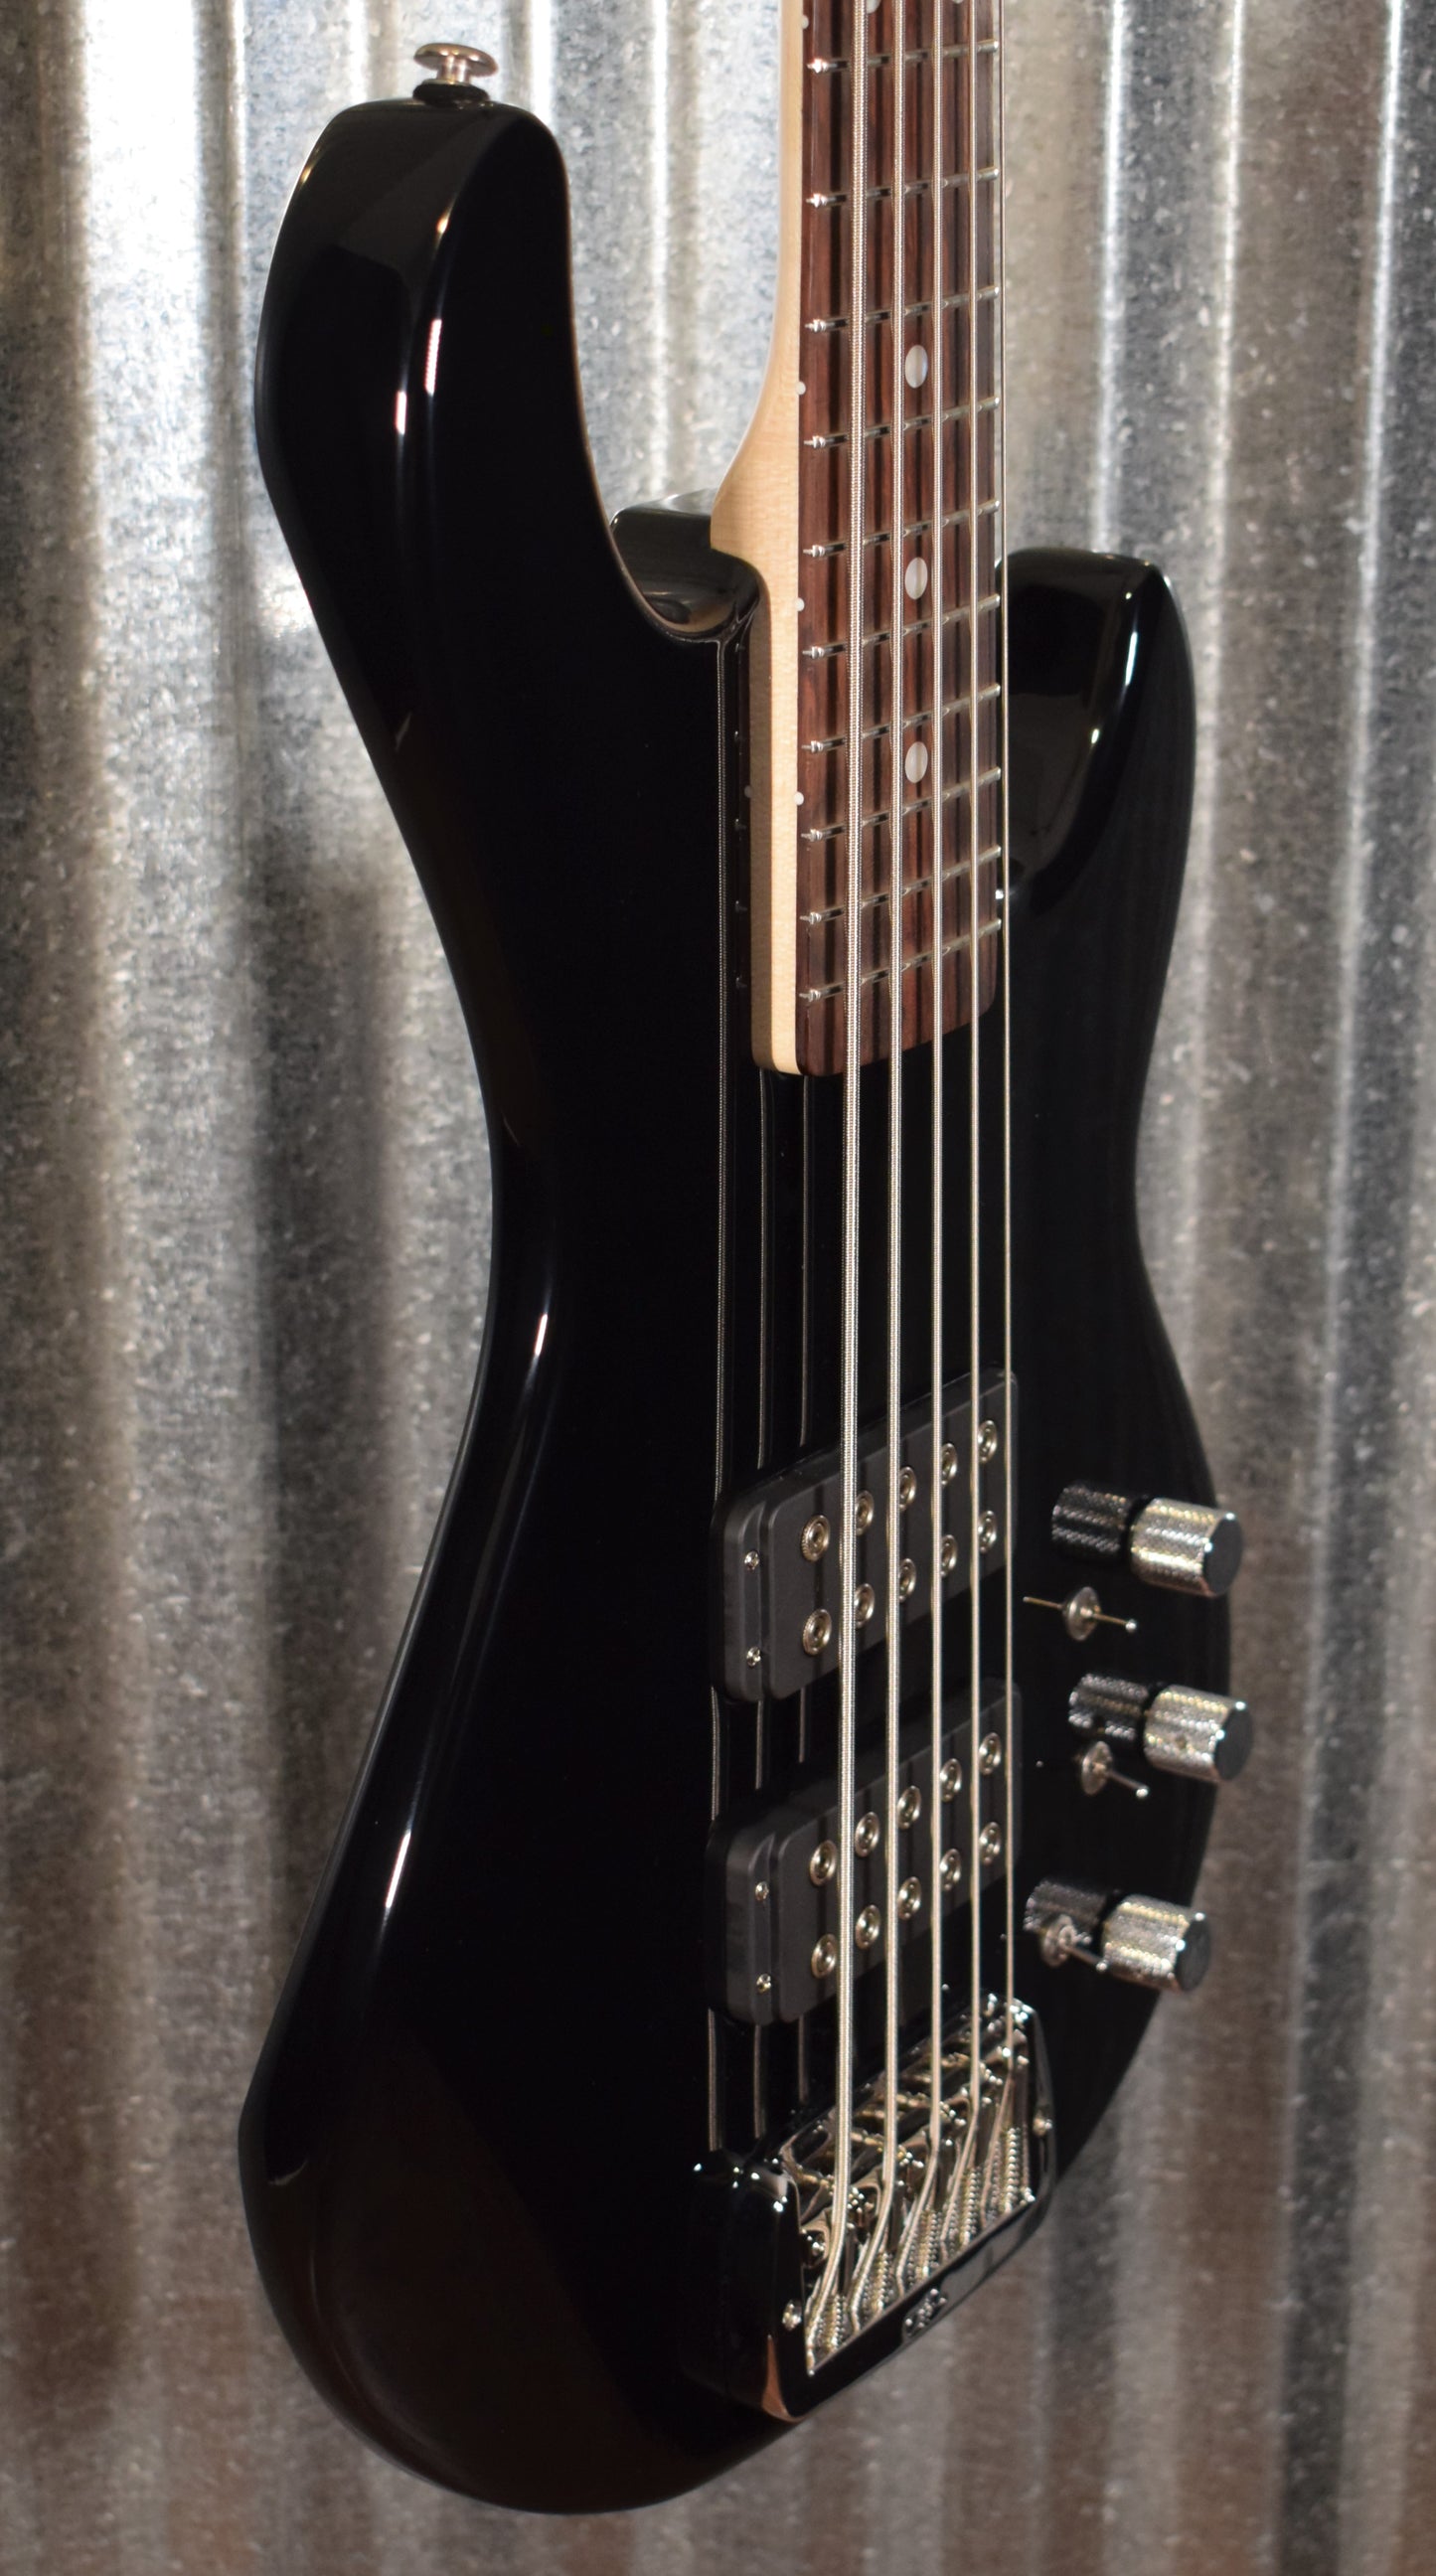 G&L USA L-2500 Jet Black 5 String Bass Rosewood Satin Neck & Case #6212